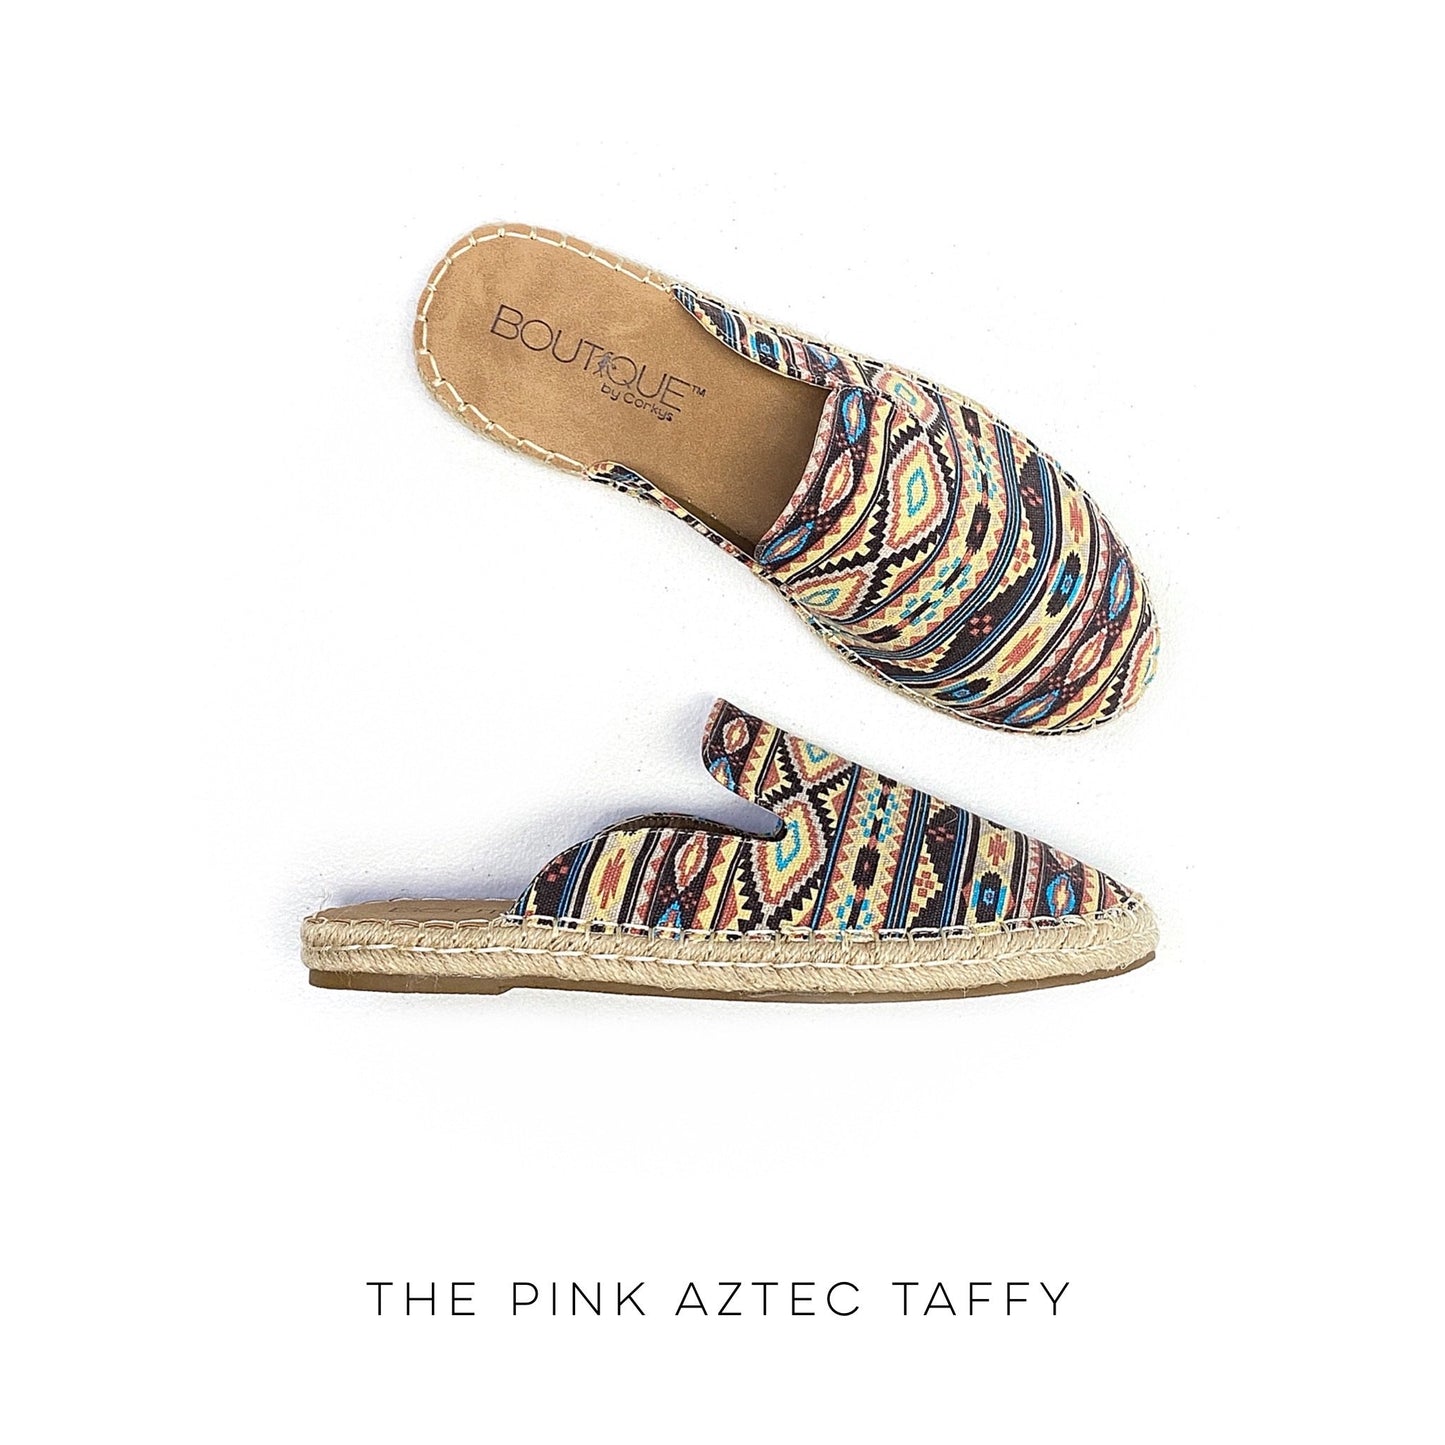 The Pink Aztec Taffy